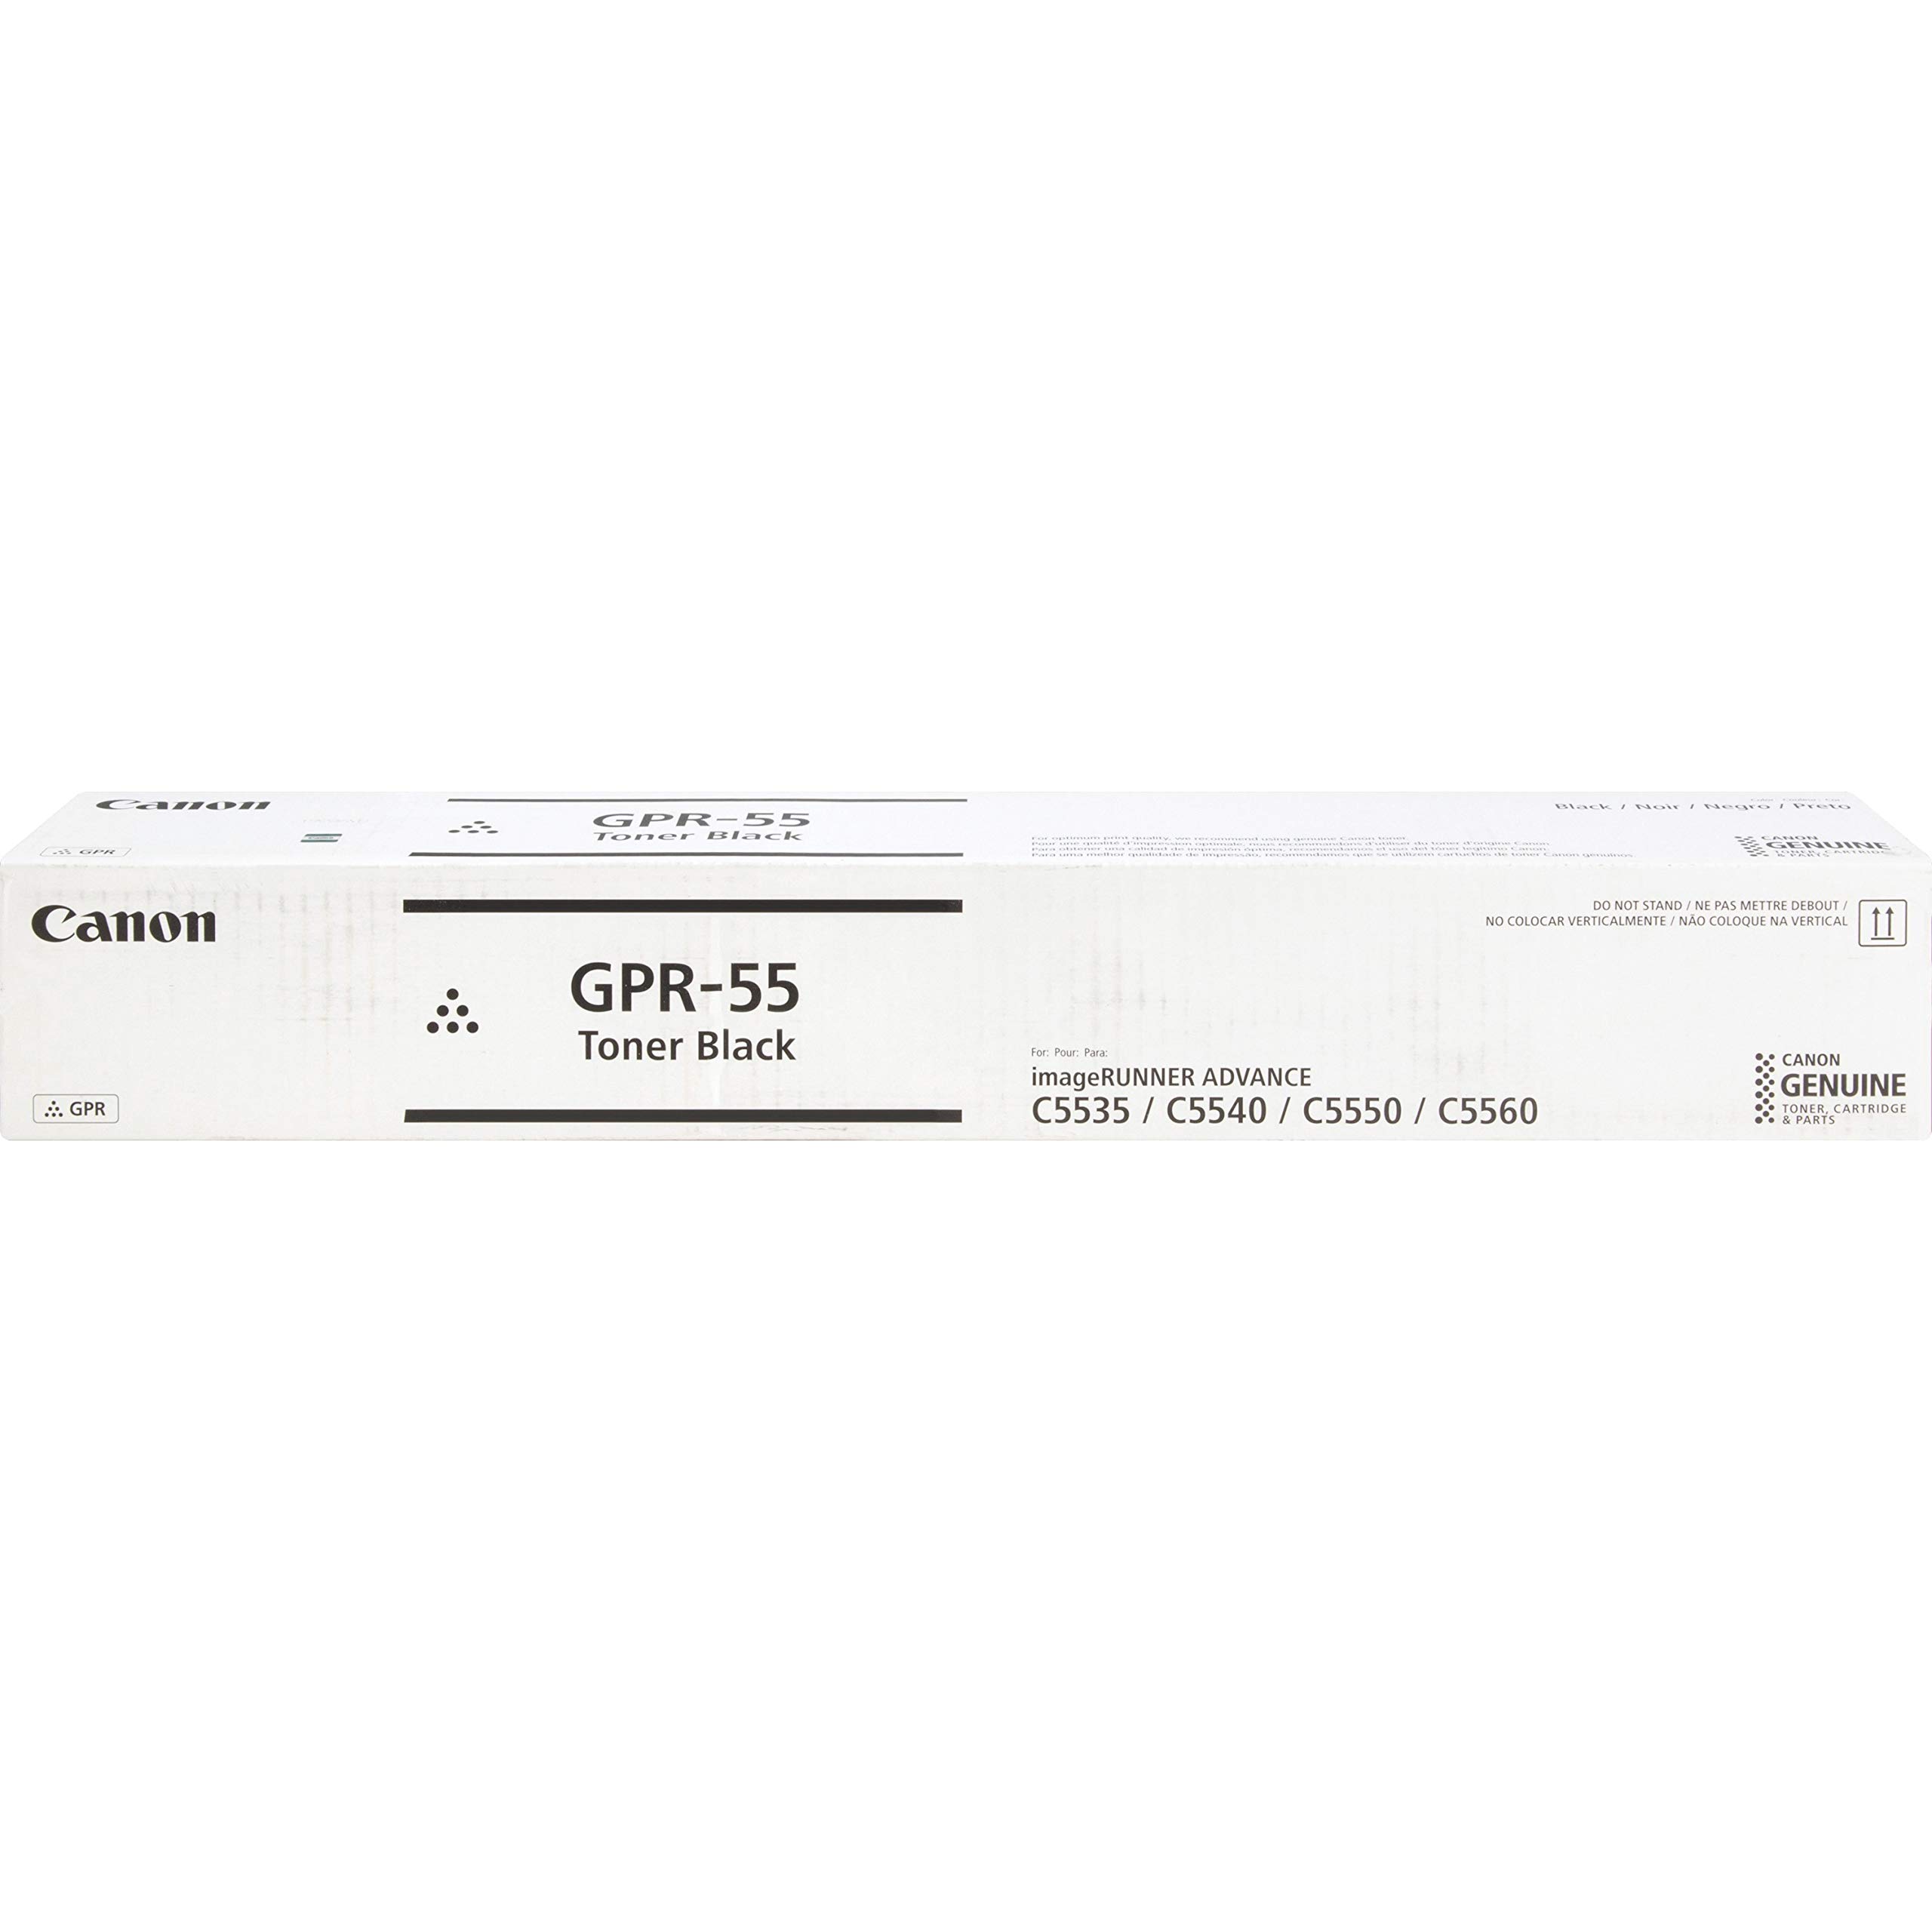 Canon GPR-55 Toner